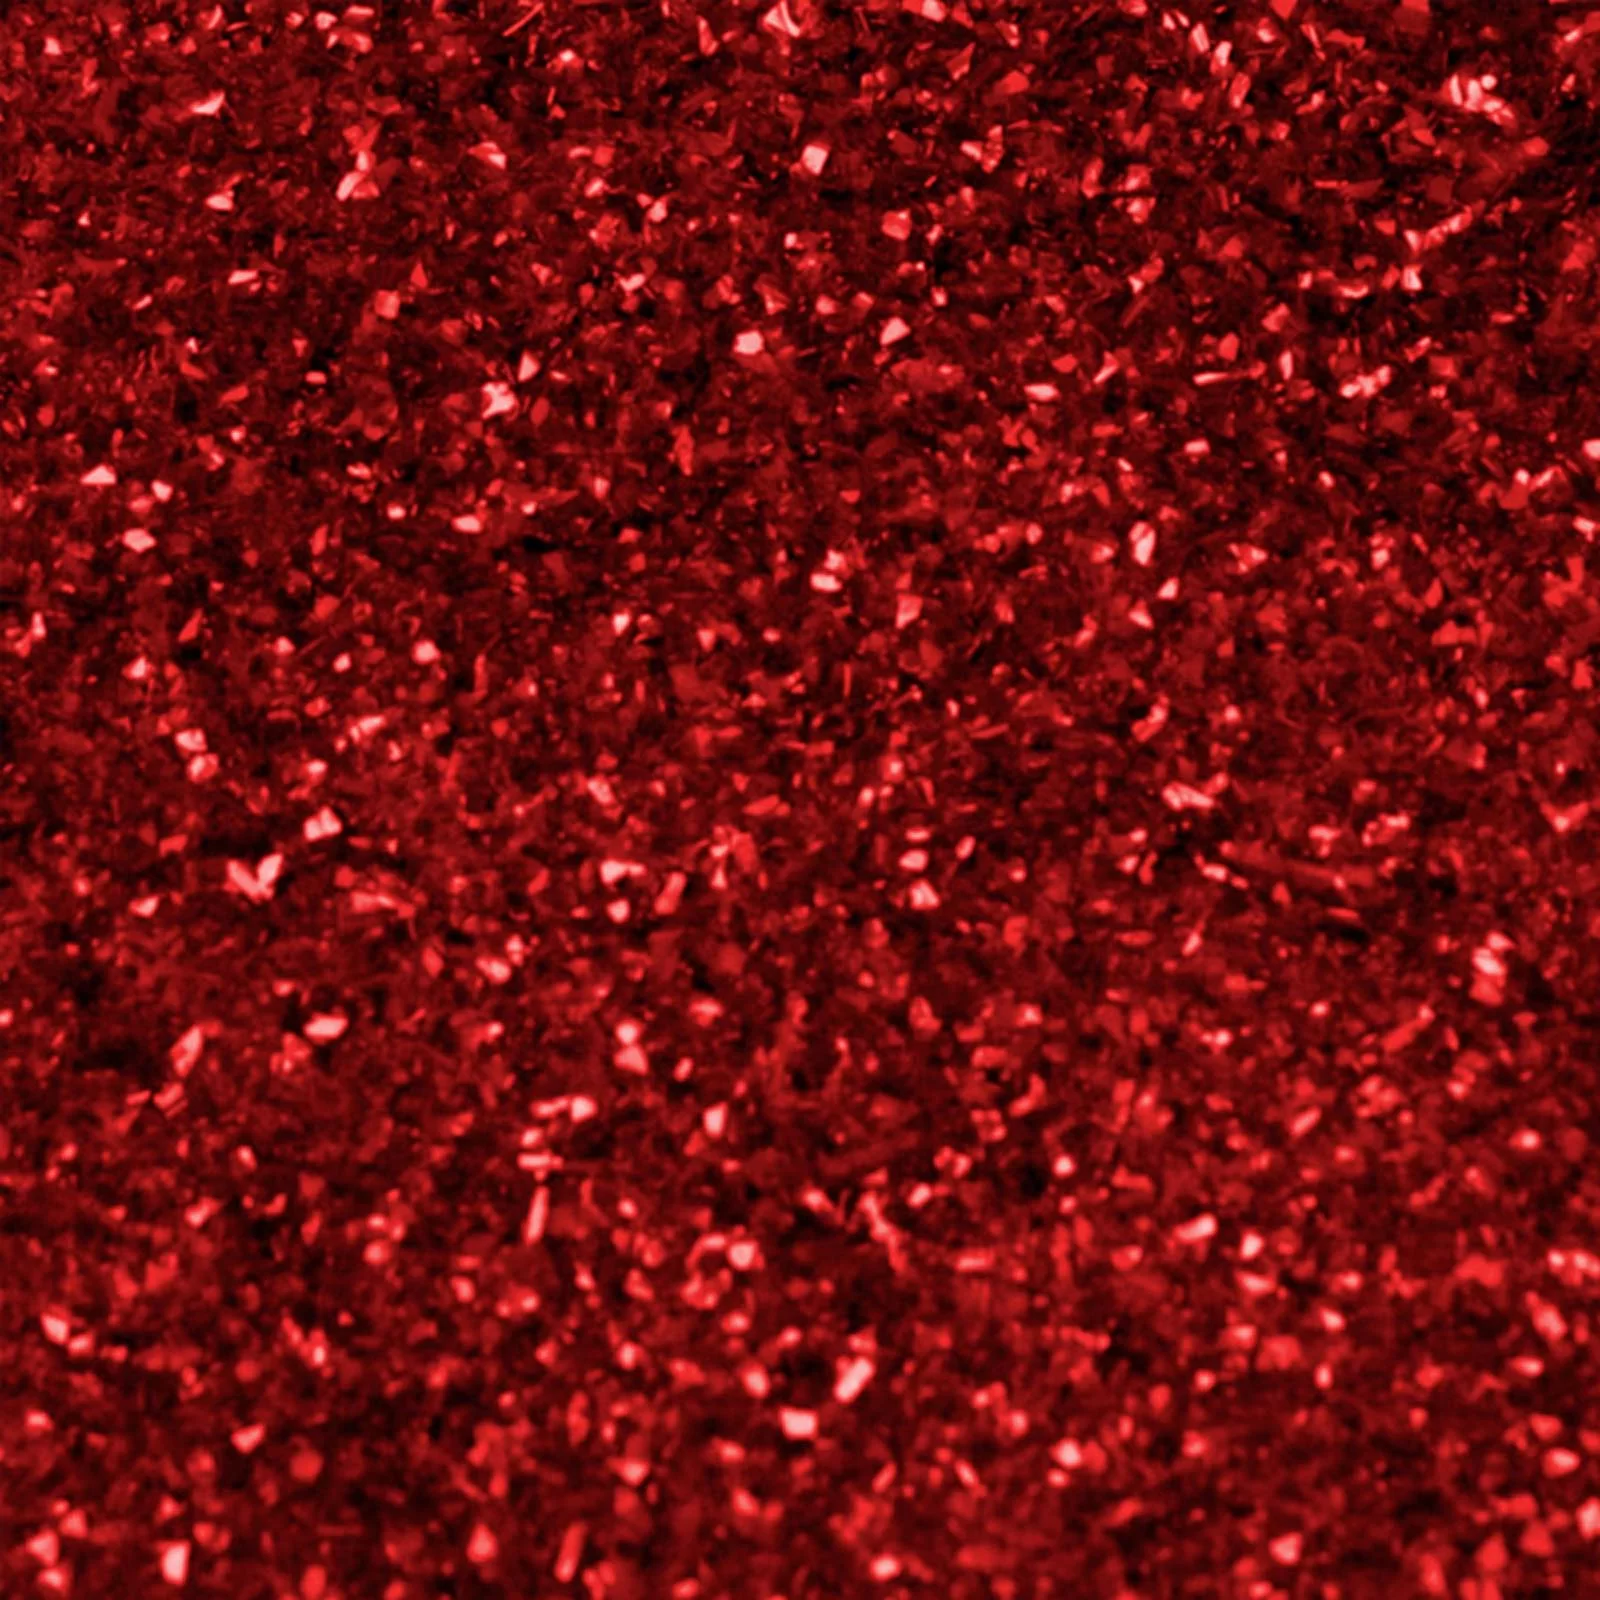 Red Edible Glitter, 20g